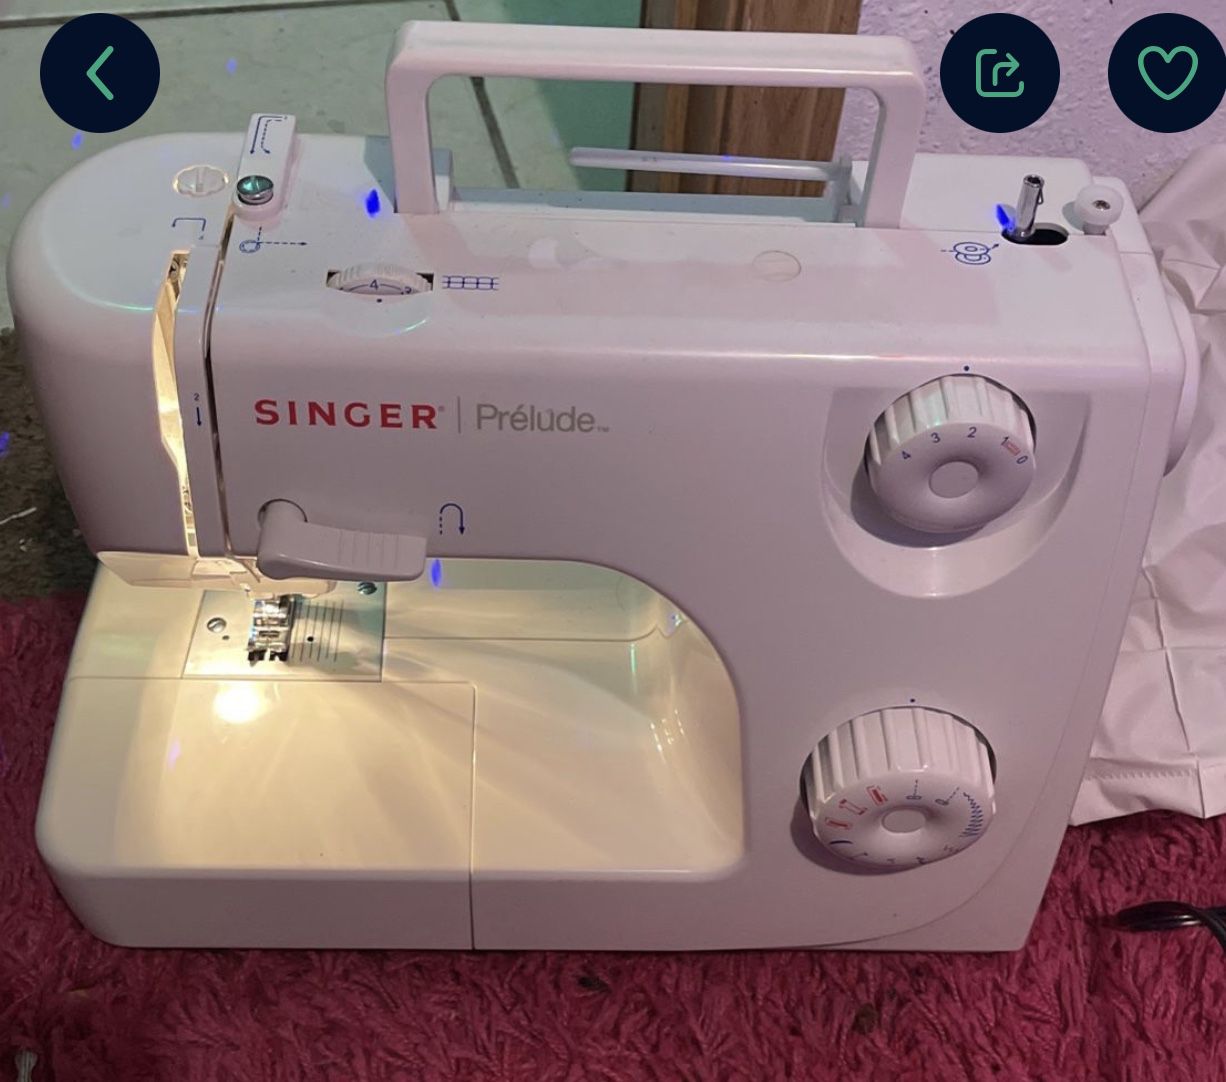 New Singer Sewing Machine